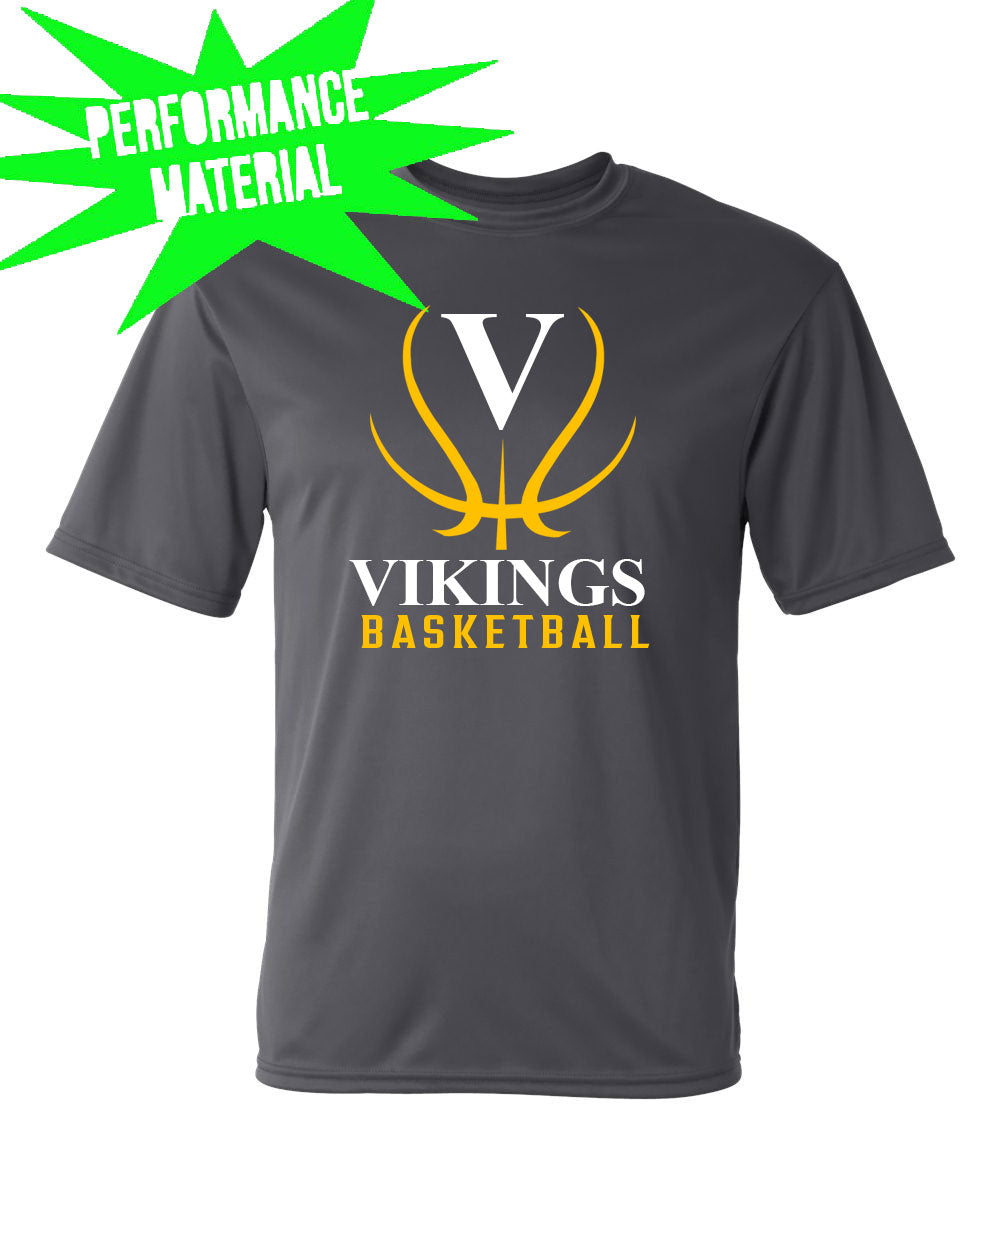 Vikings Basketball Performance Material T-Shirt Design 3